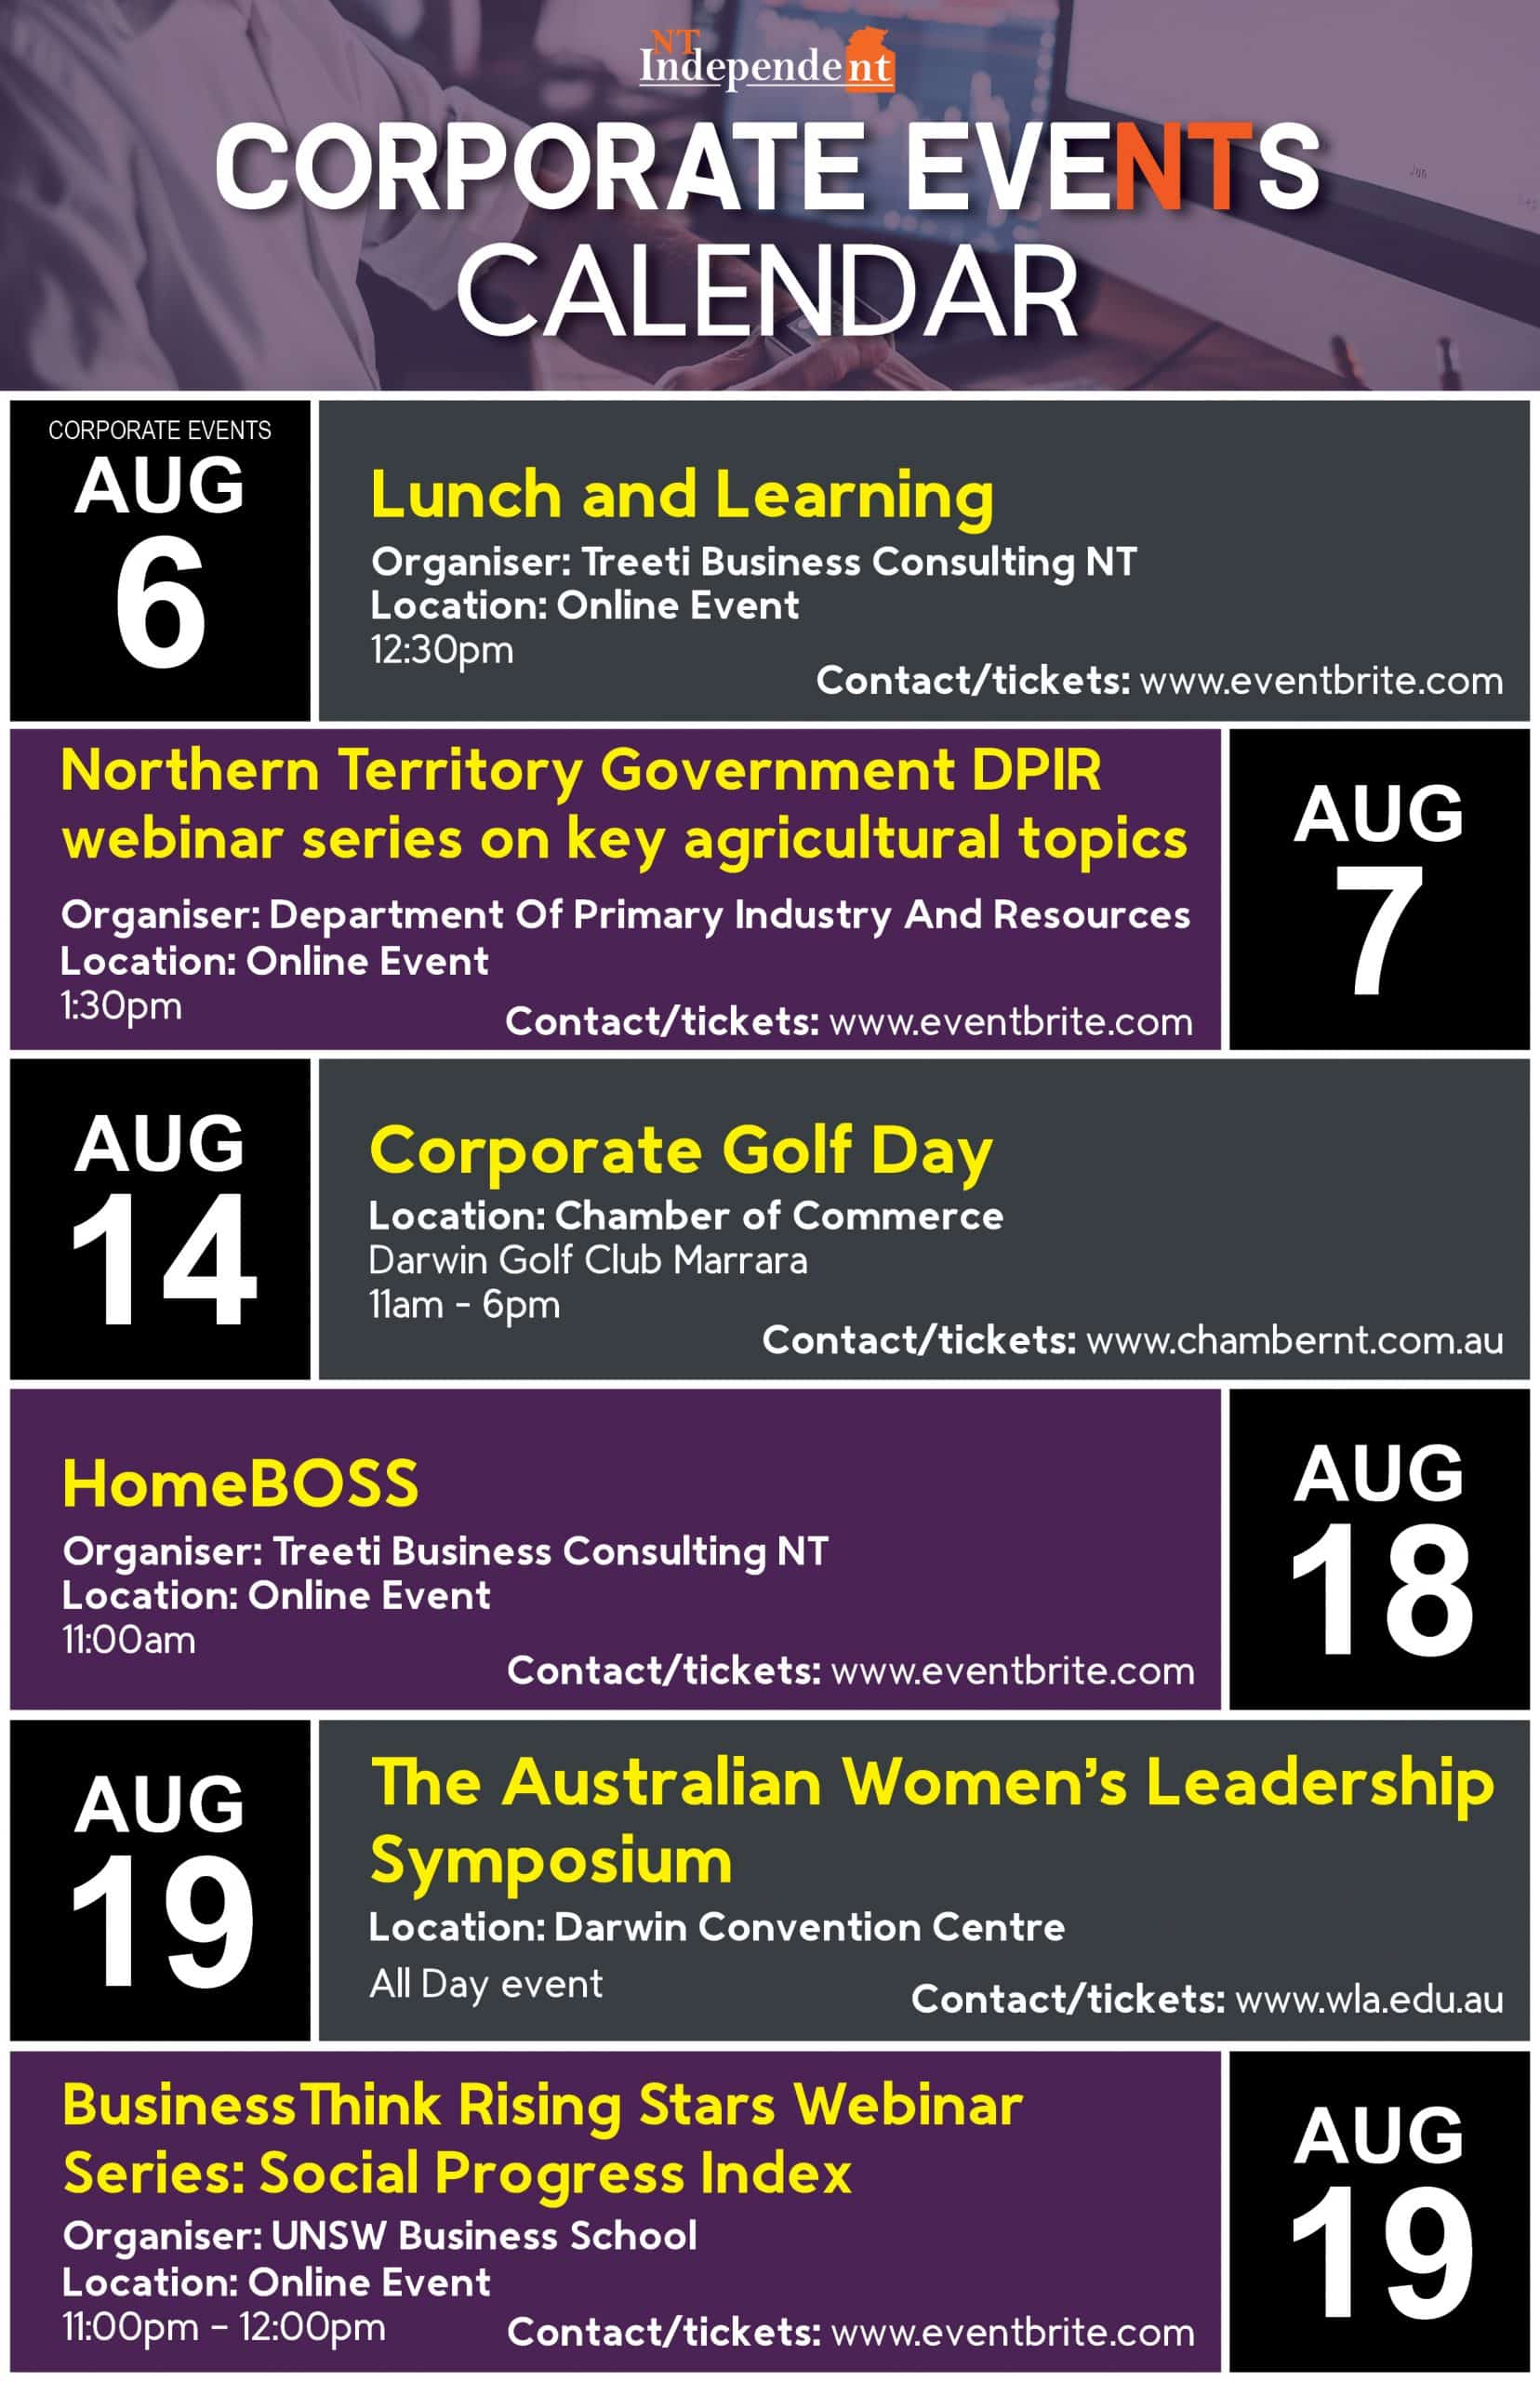 Corporate events calendar August